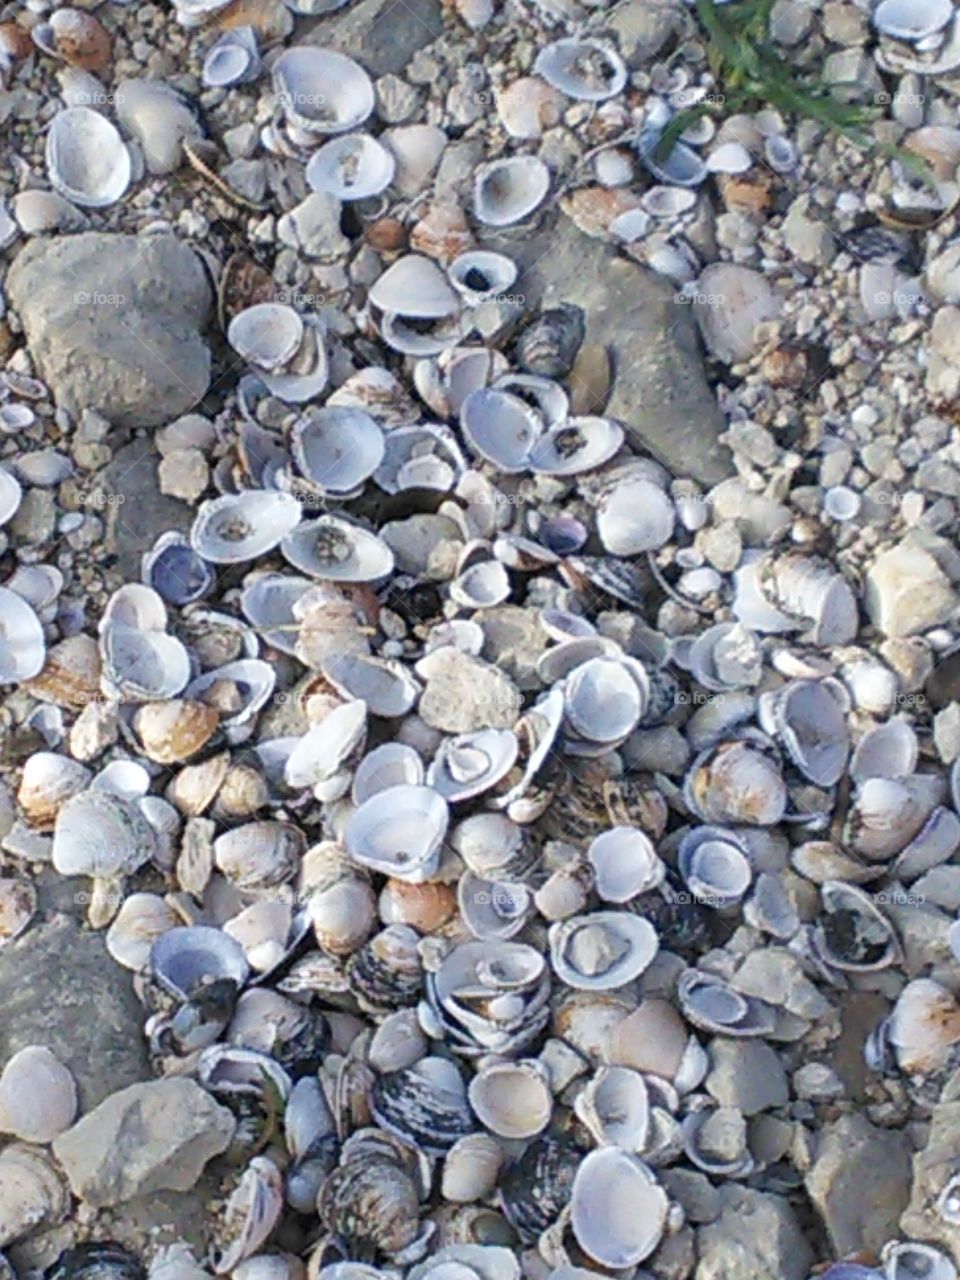 Sea shells on a rocky shore